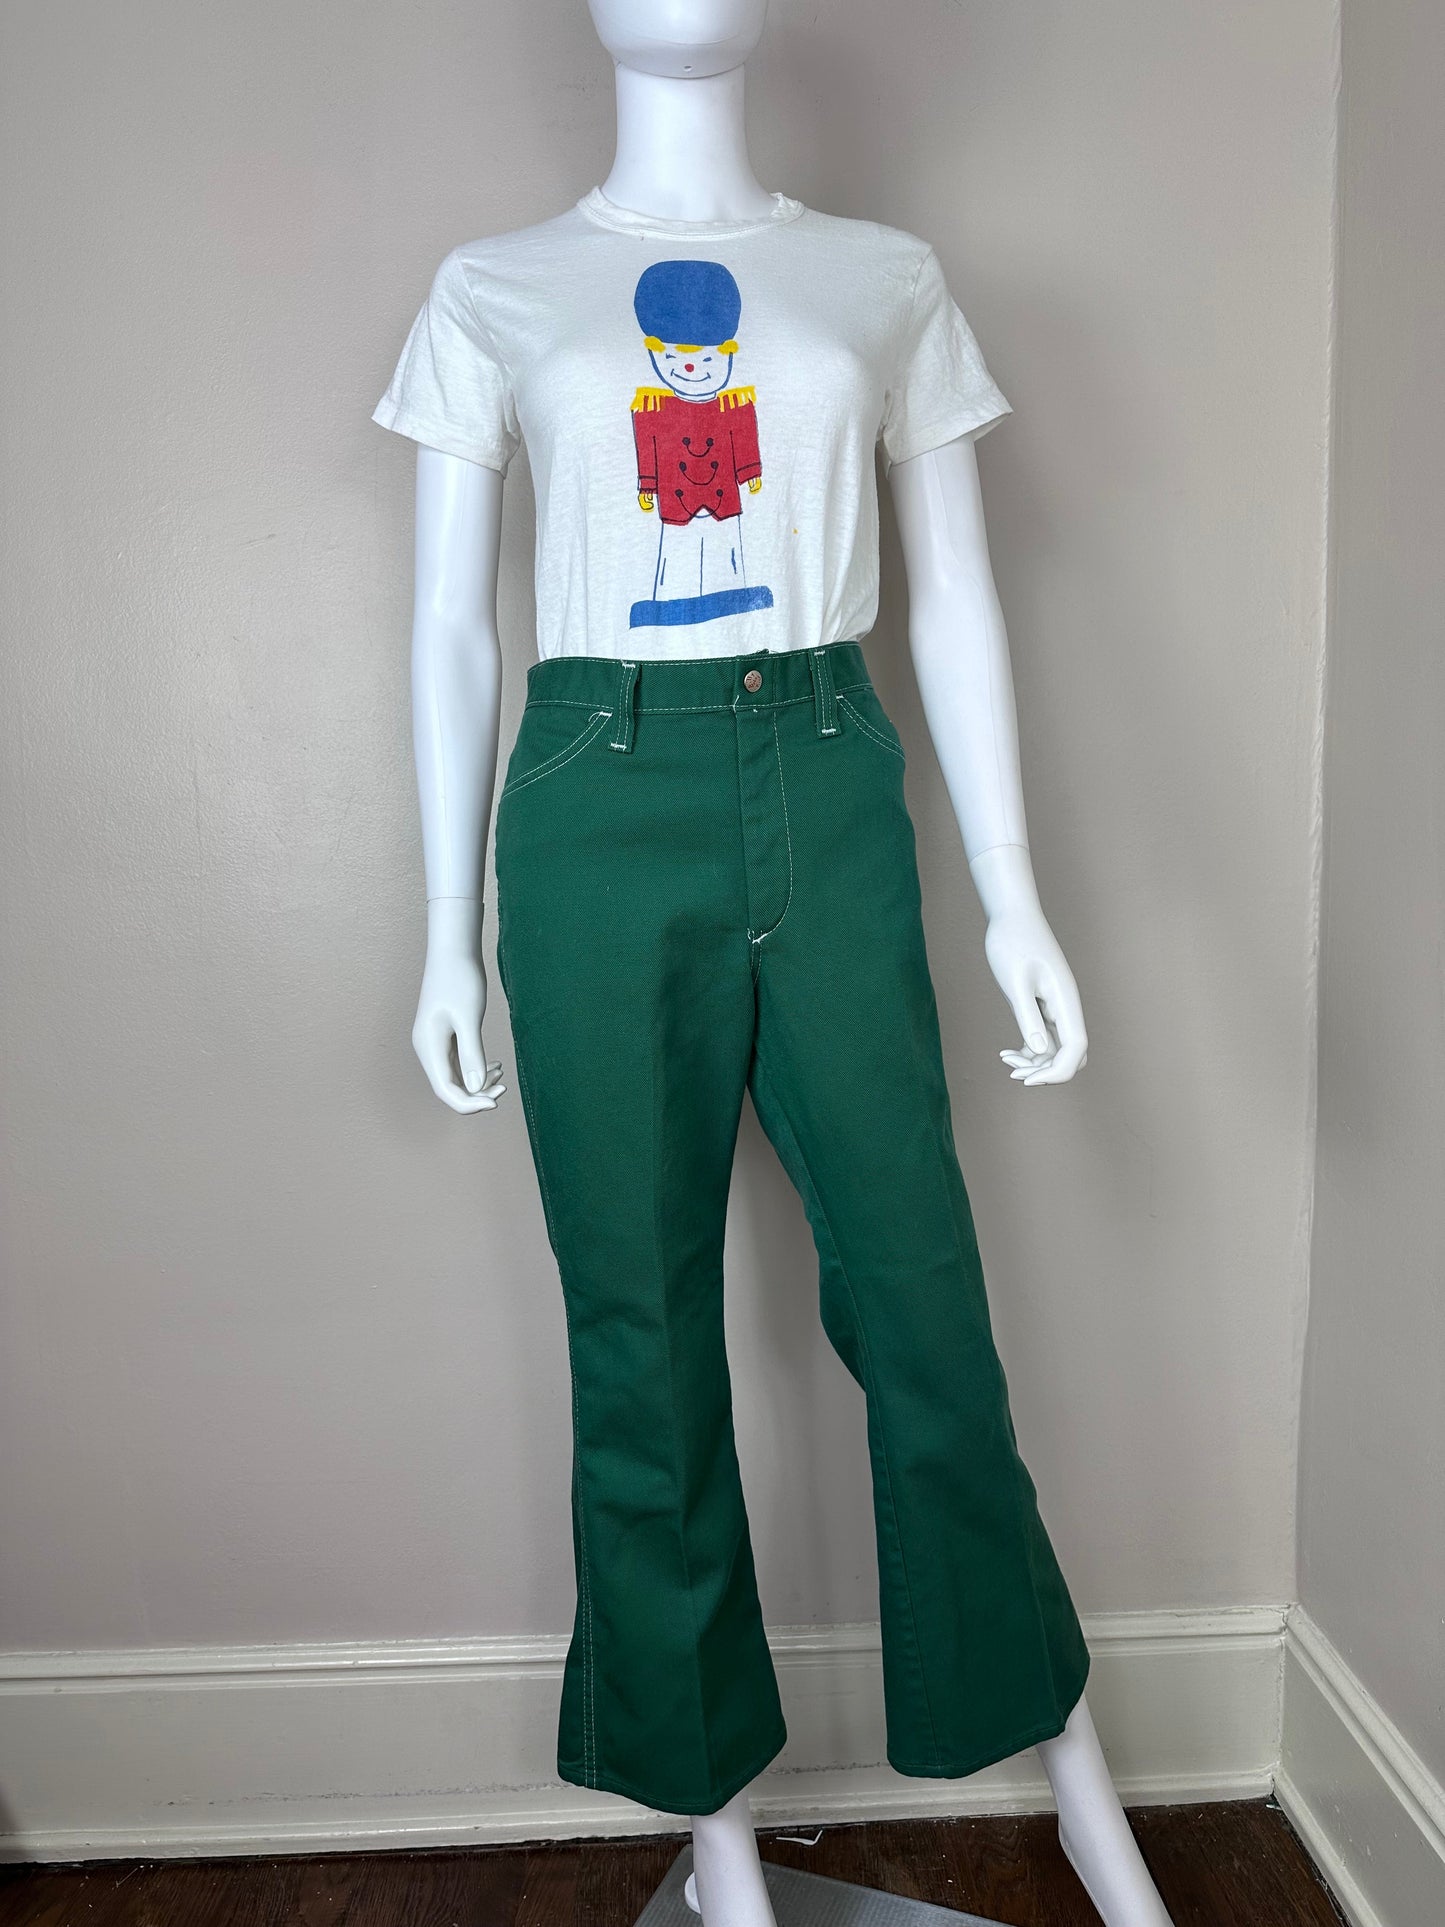 1970s Green Denim Jeans, Billy the Kid, 31"x27.5"